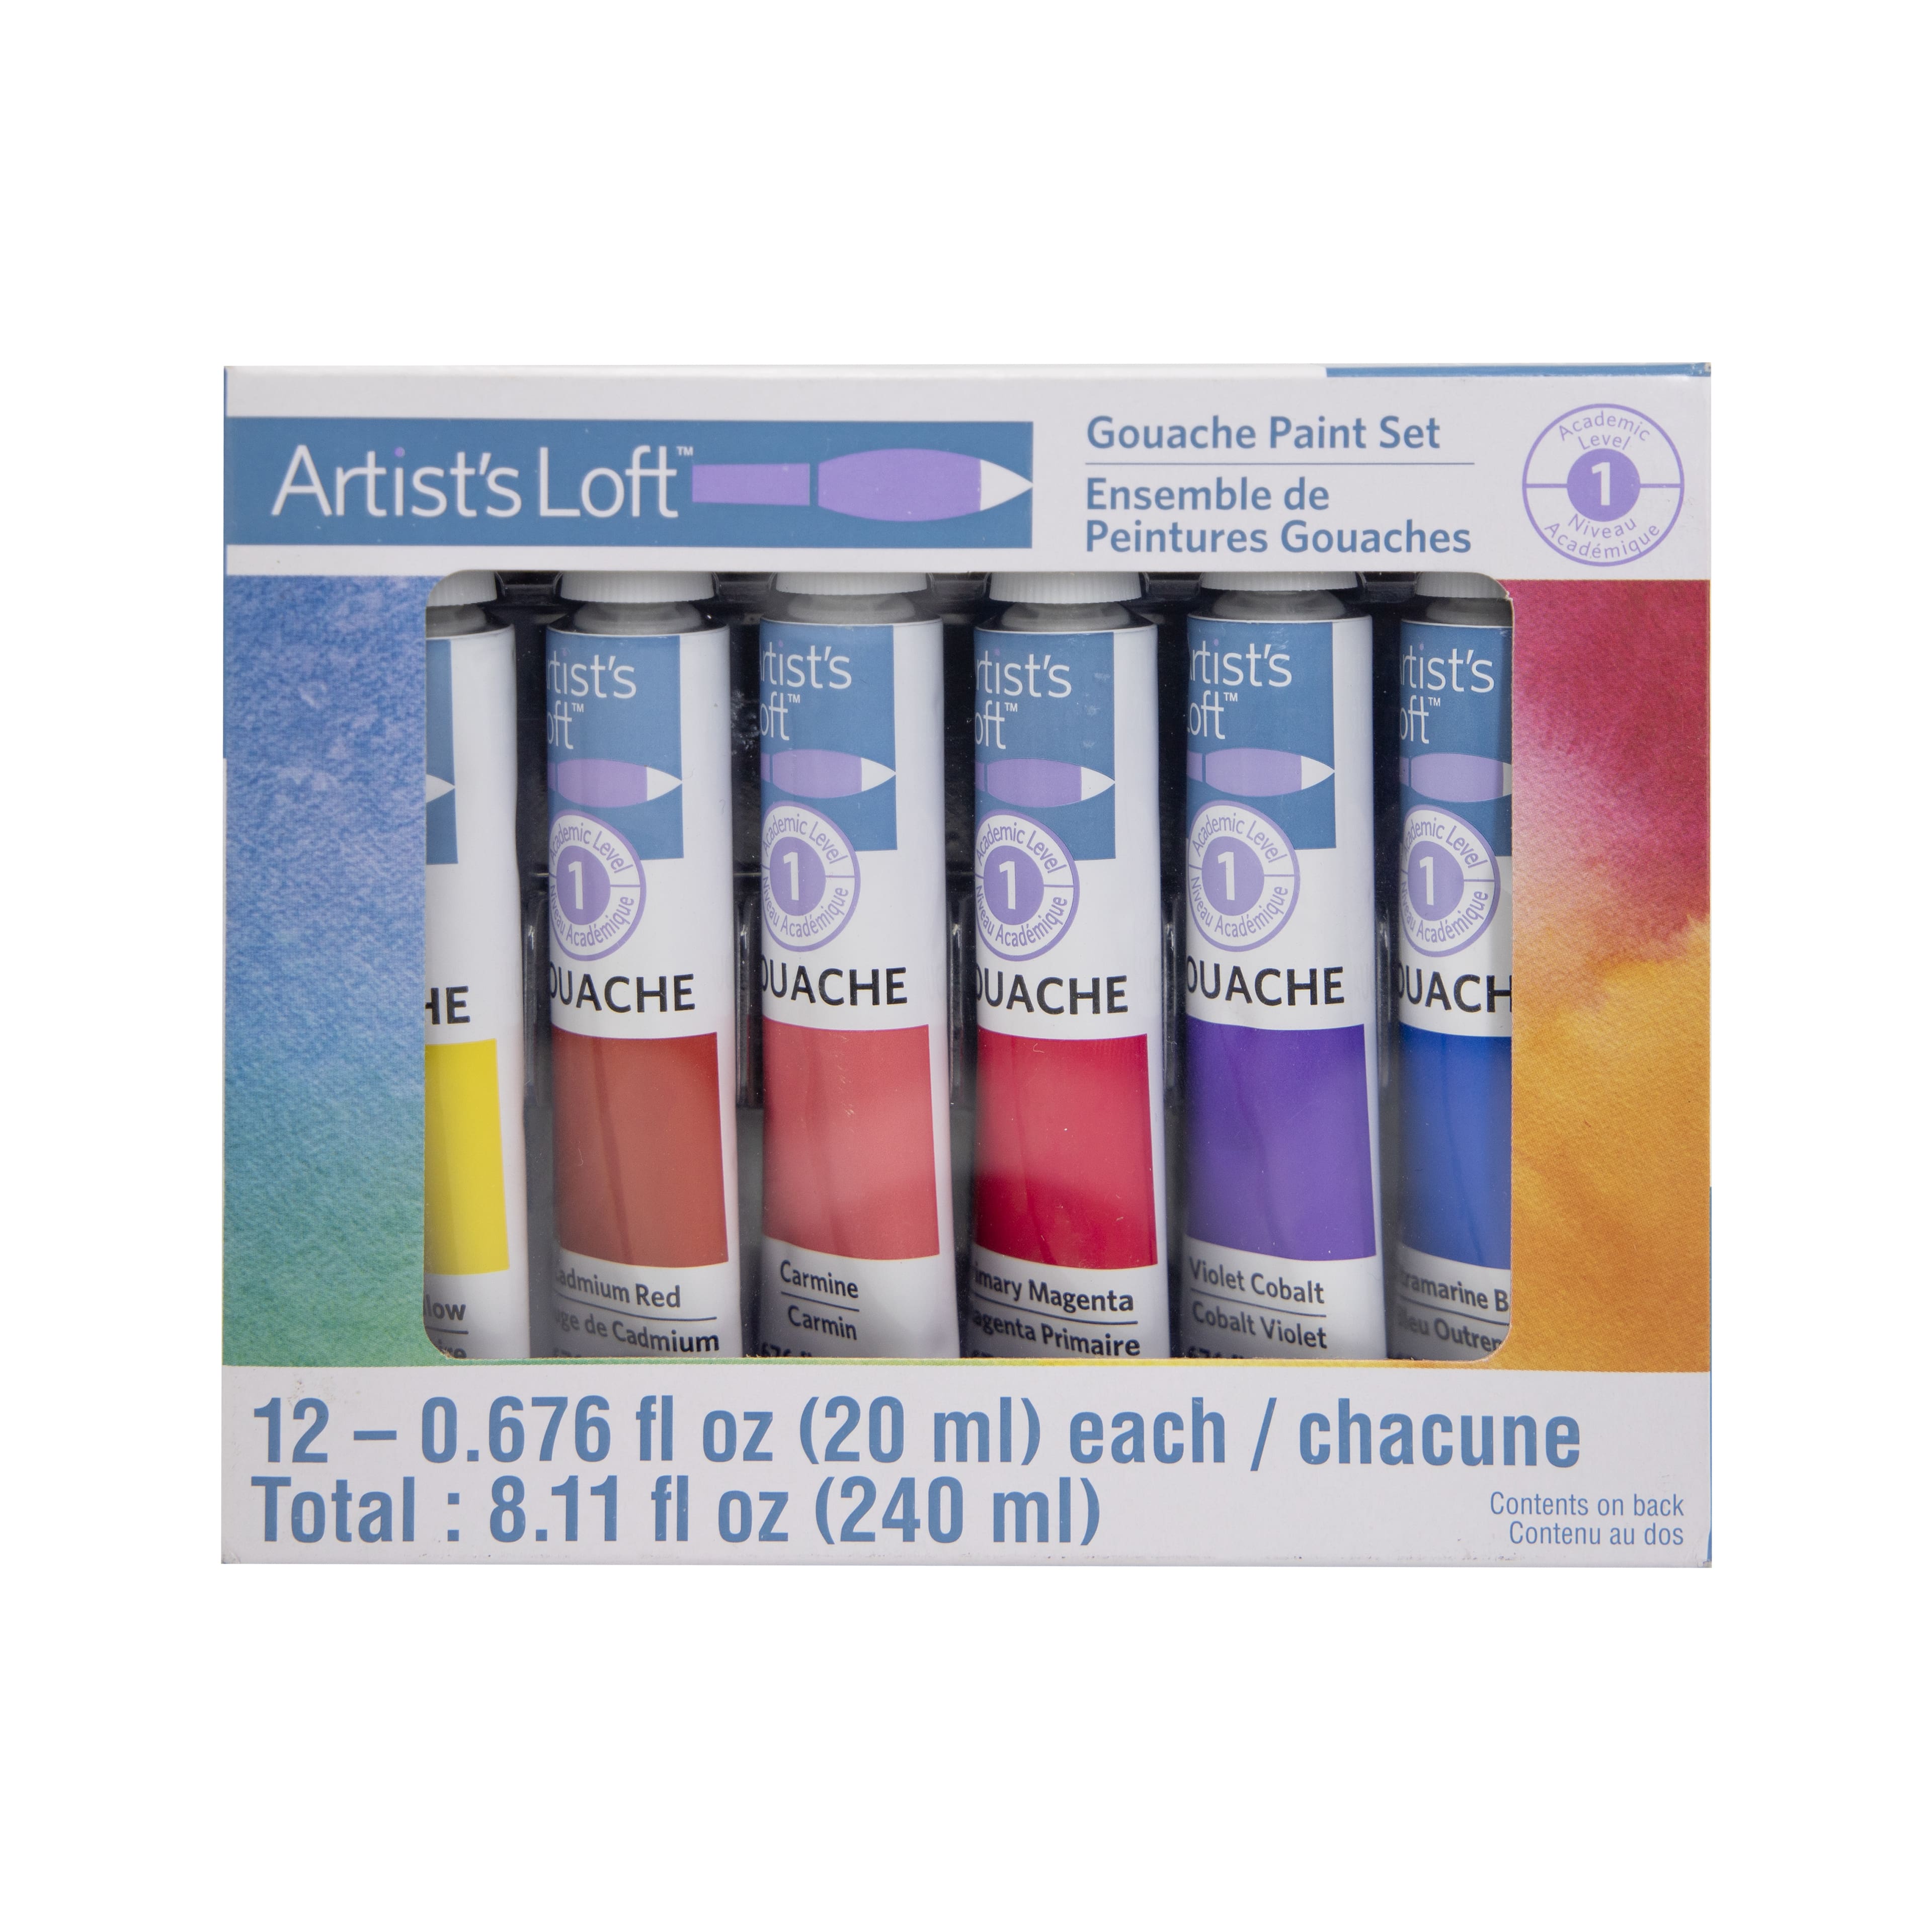 Artkey Gouache Paint Set - 24 Colors 50g/1.8 oz Jelly Gouache Paint in A Carrying Case - Non Toxic Gouache Watercolor Paint for Artists Beginners